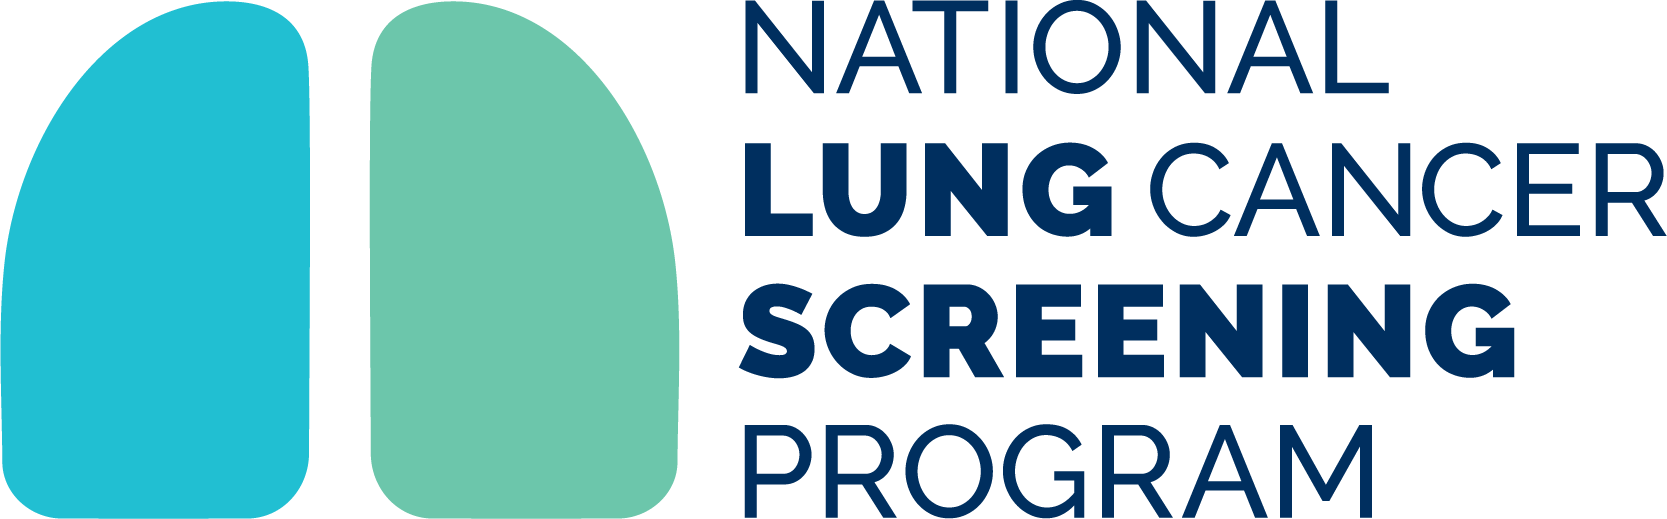 Lung Cancer screening program logo